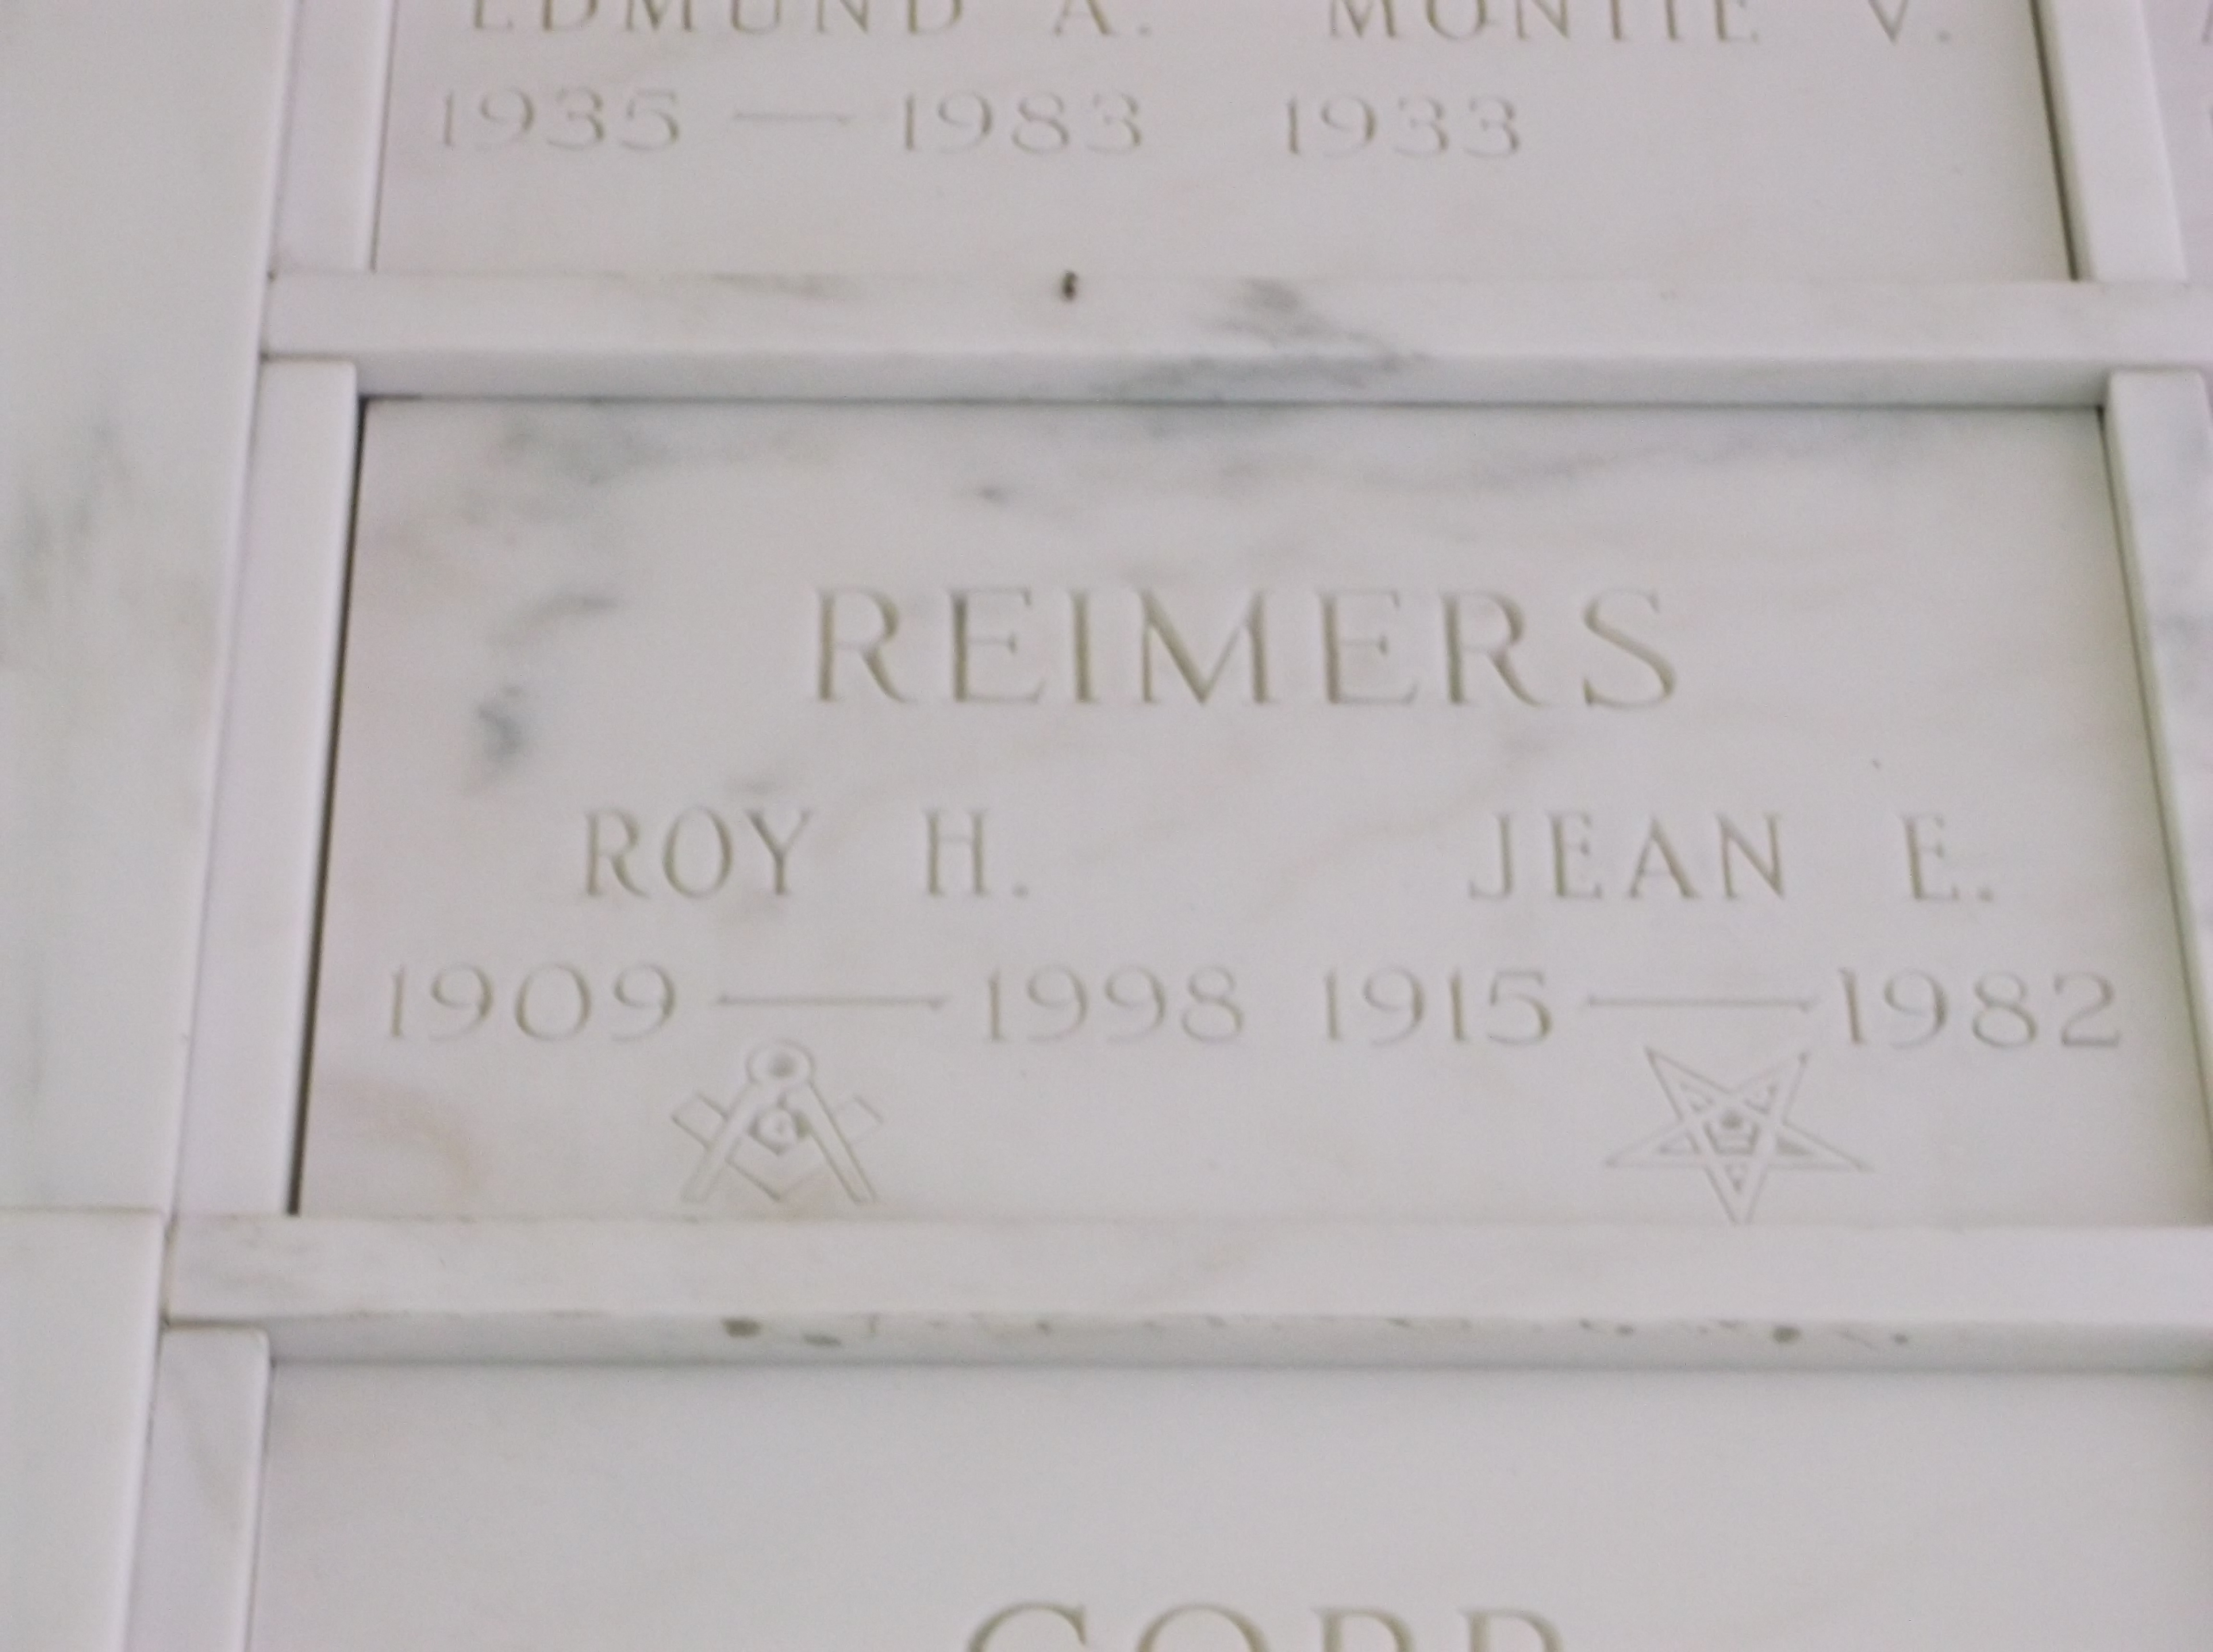 Roy H Reimers